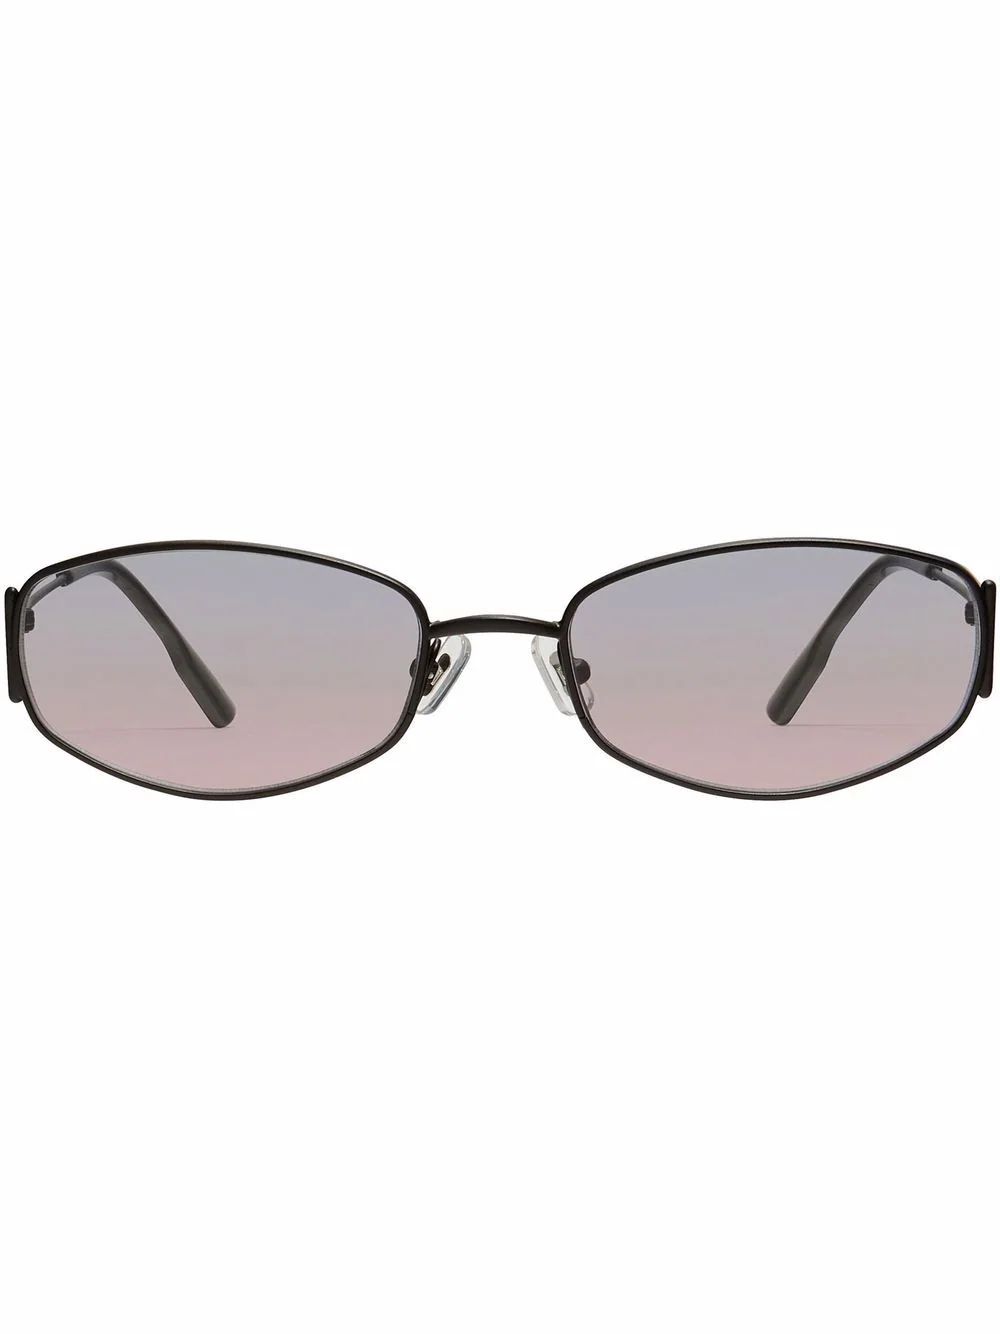 Moneta M01 oval sunglasses | Farfetch Global